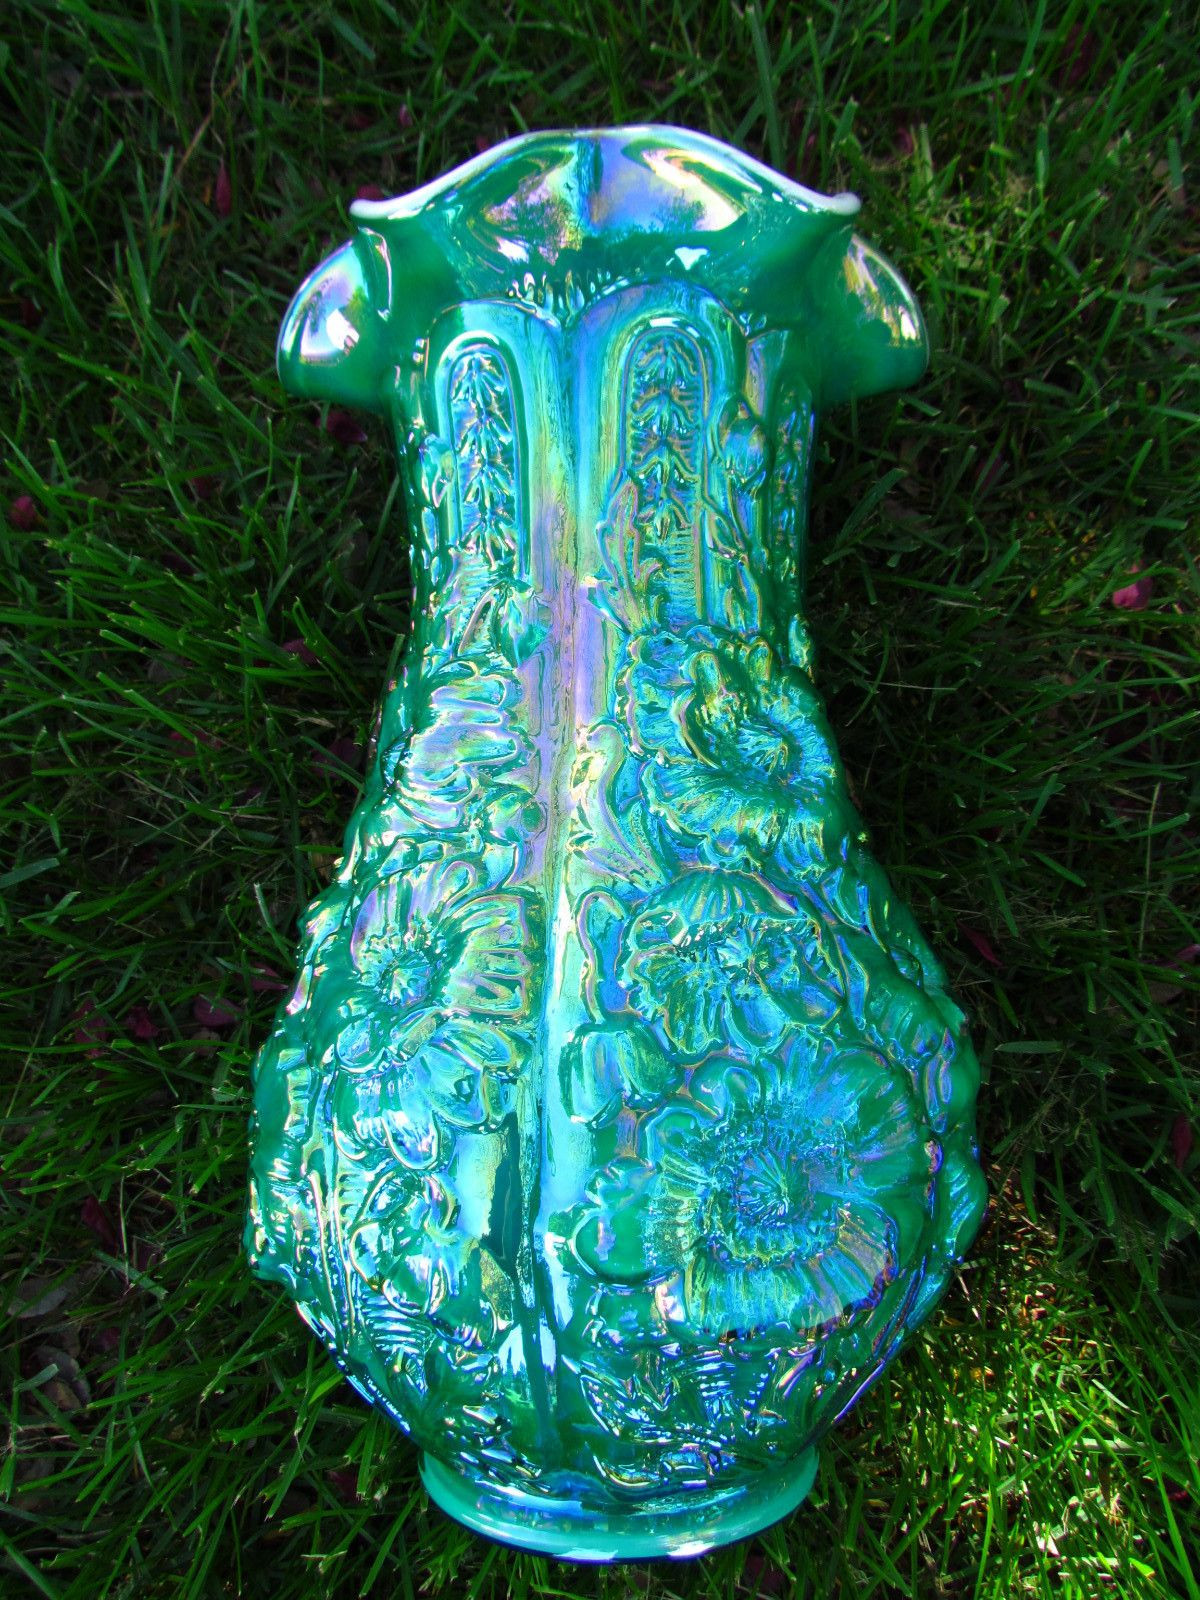 26 Perfect Cut Glass Vase 2024 free download cut glass vase of fenton poppy show vase emerald green jpg colored glass cut with cut glass ac2b7 fenton poppy show vase emerald green jpg